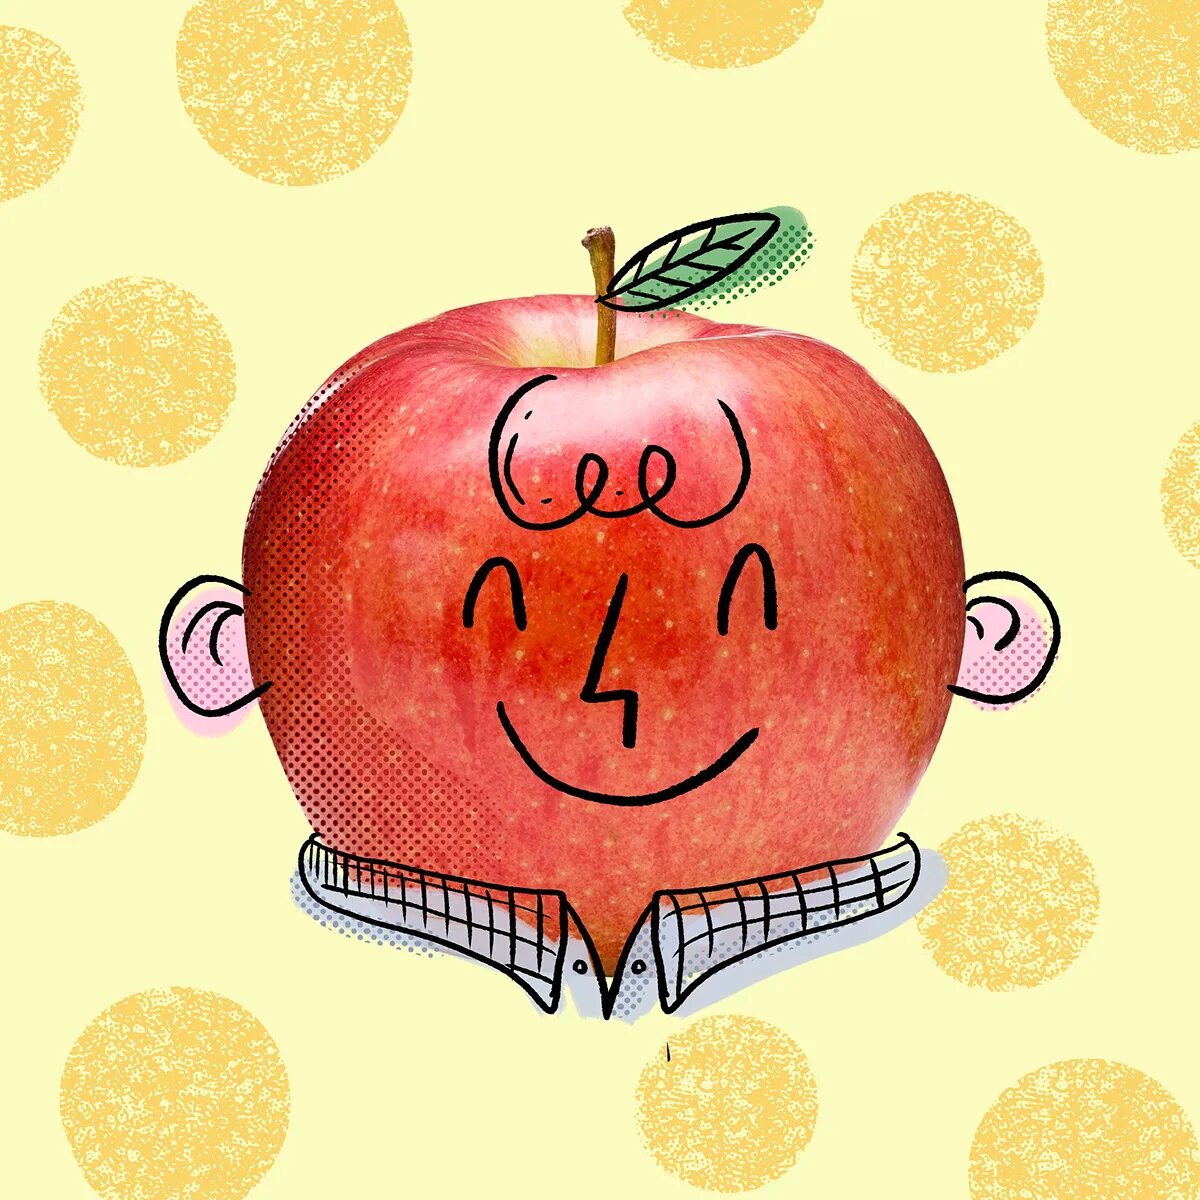 Mr apple. Яблоко герой. Мистер яблоко. Большое яблоко персонажи. Персонаж Apple.